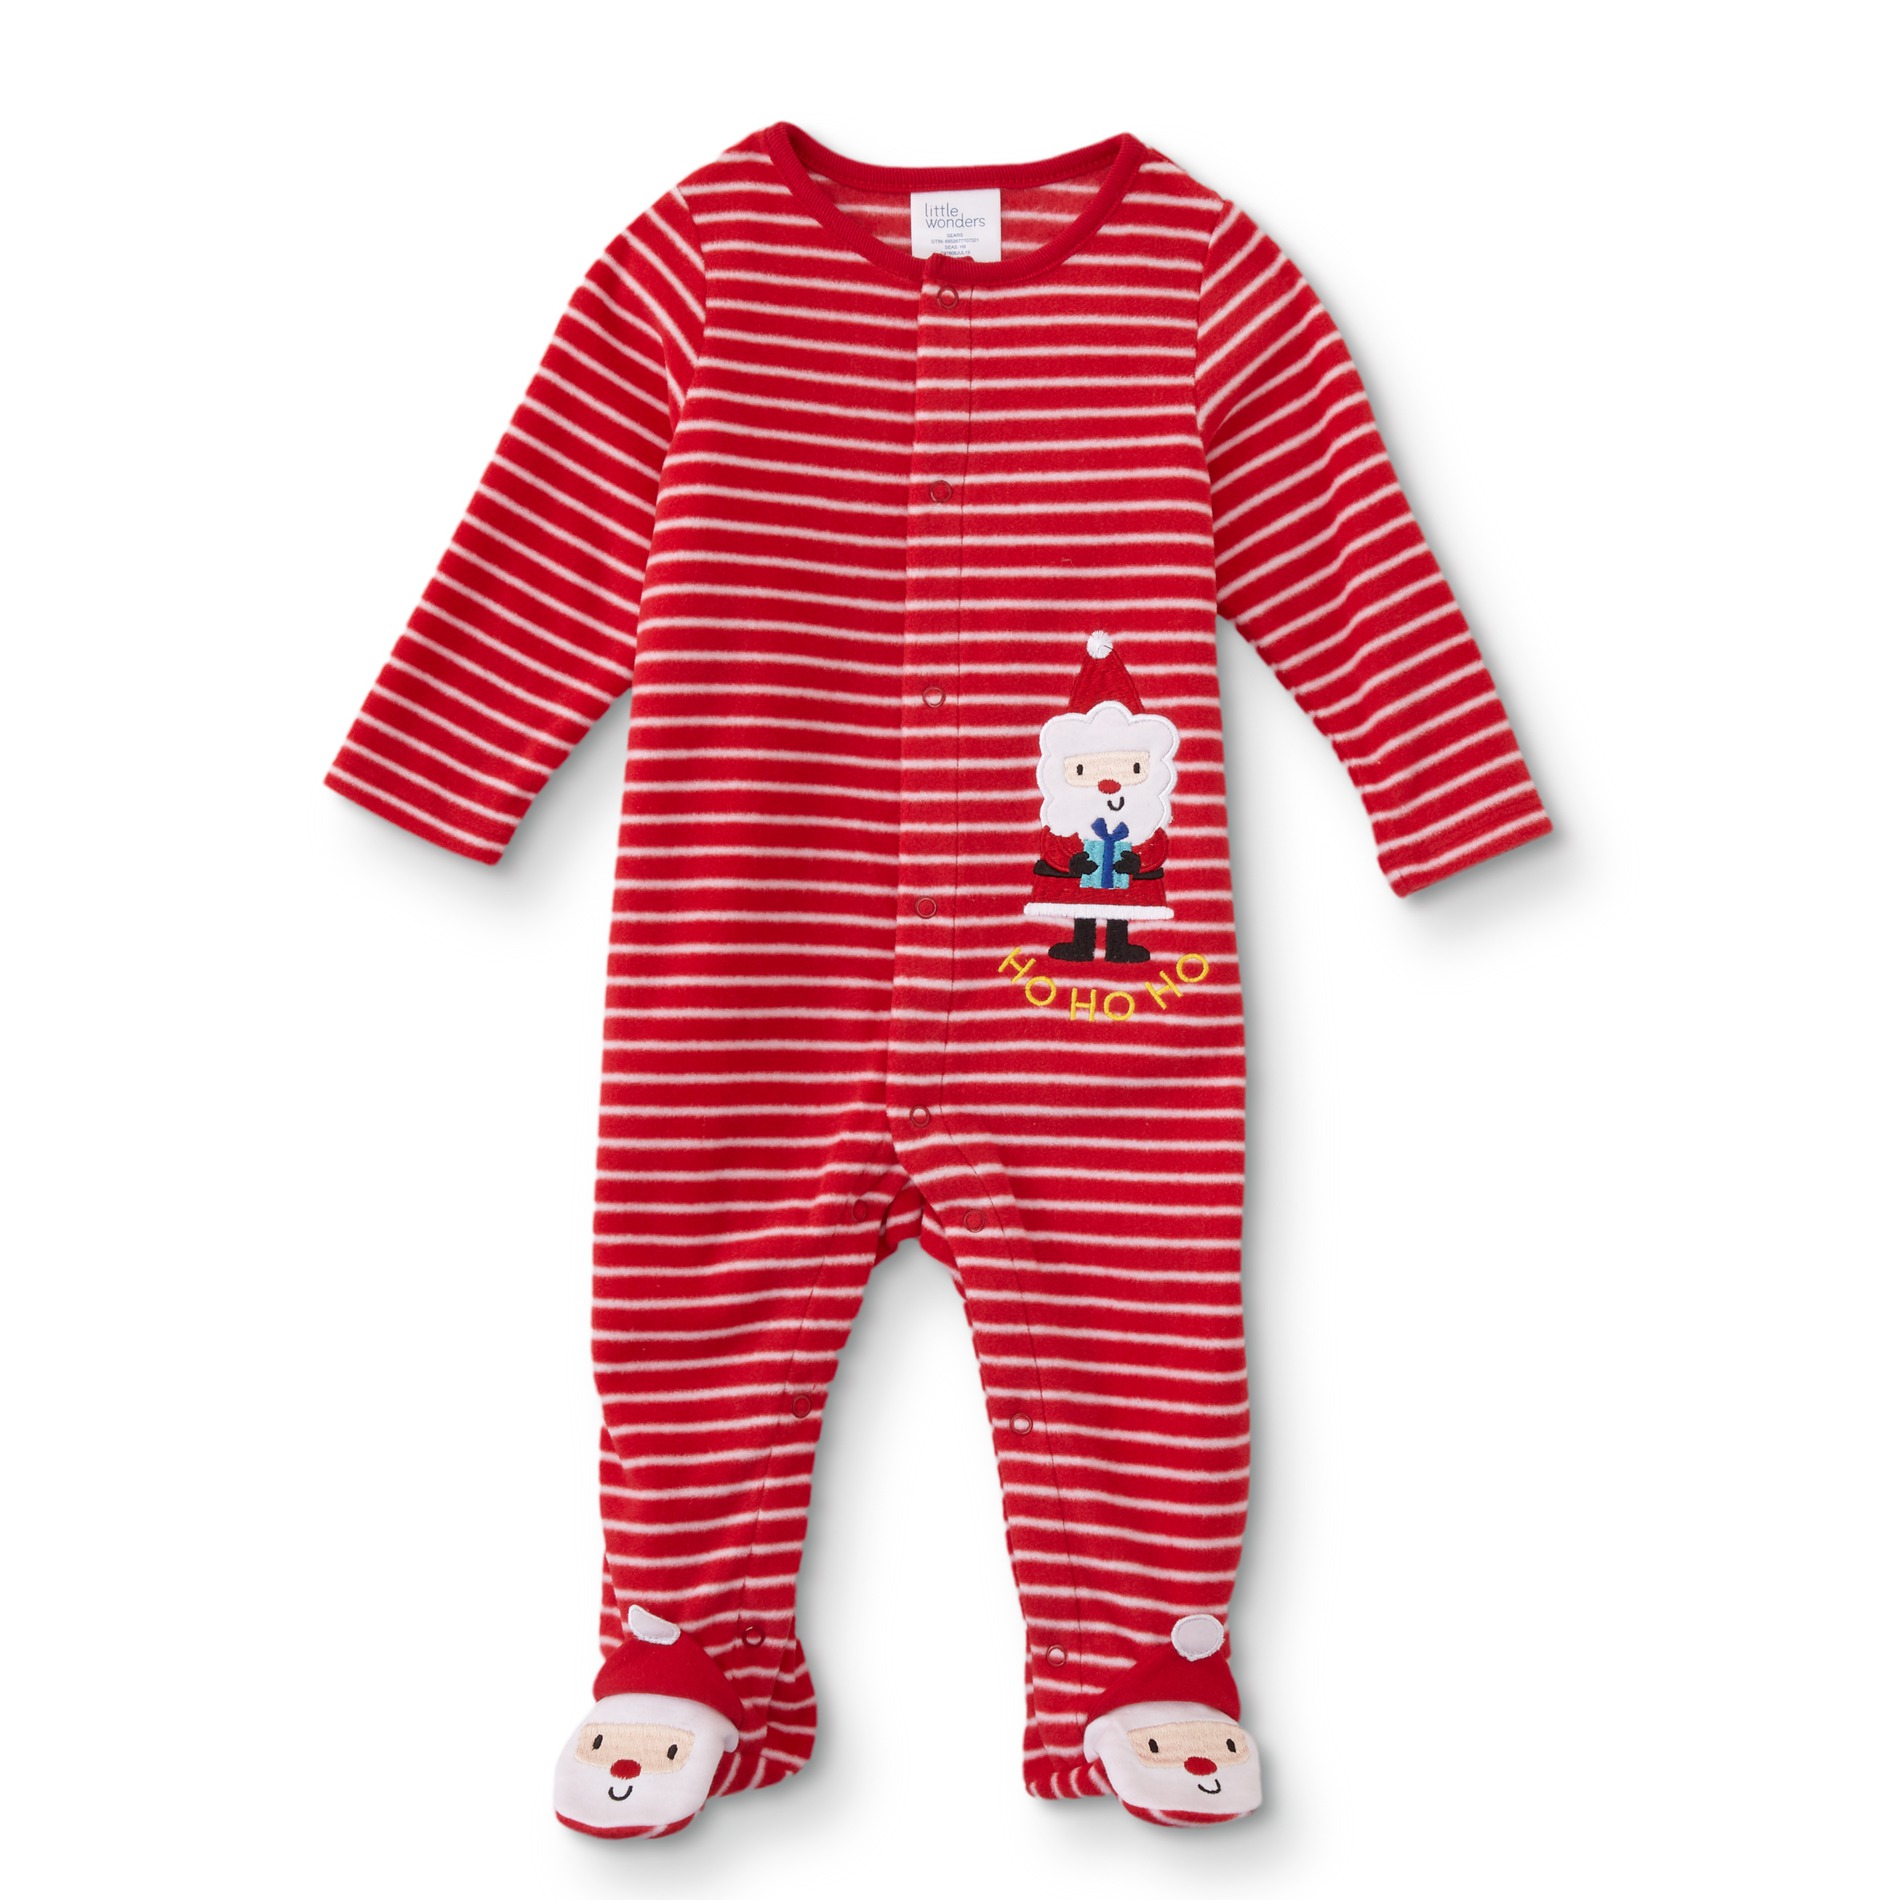 Little Wonders Infants' Christmas Sleeper Pajamas - Santa Claus/Striped